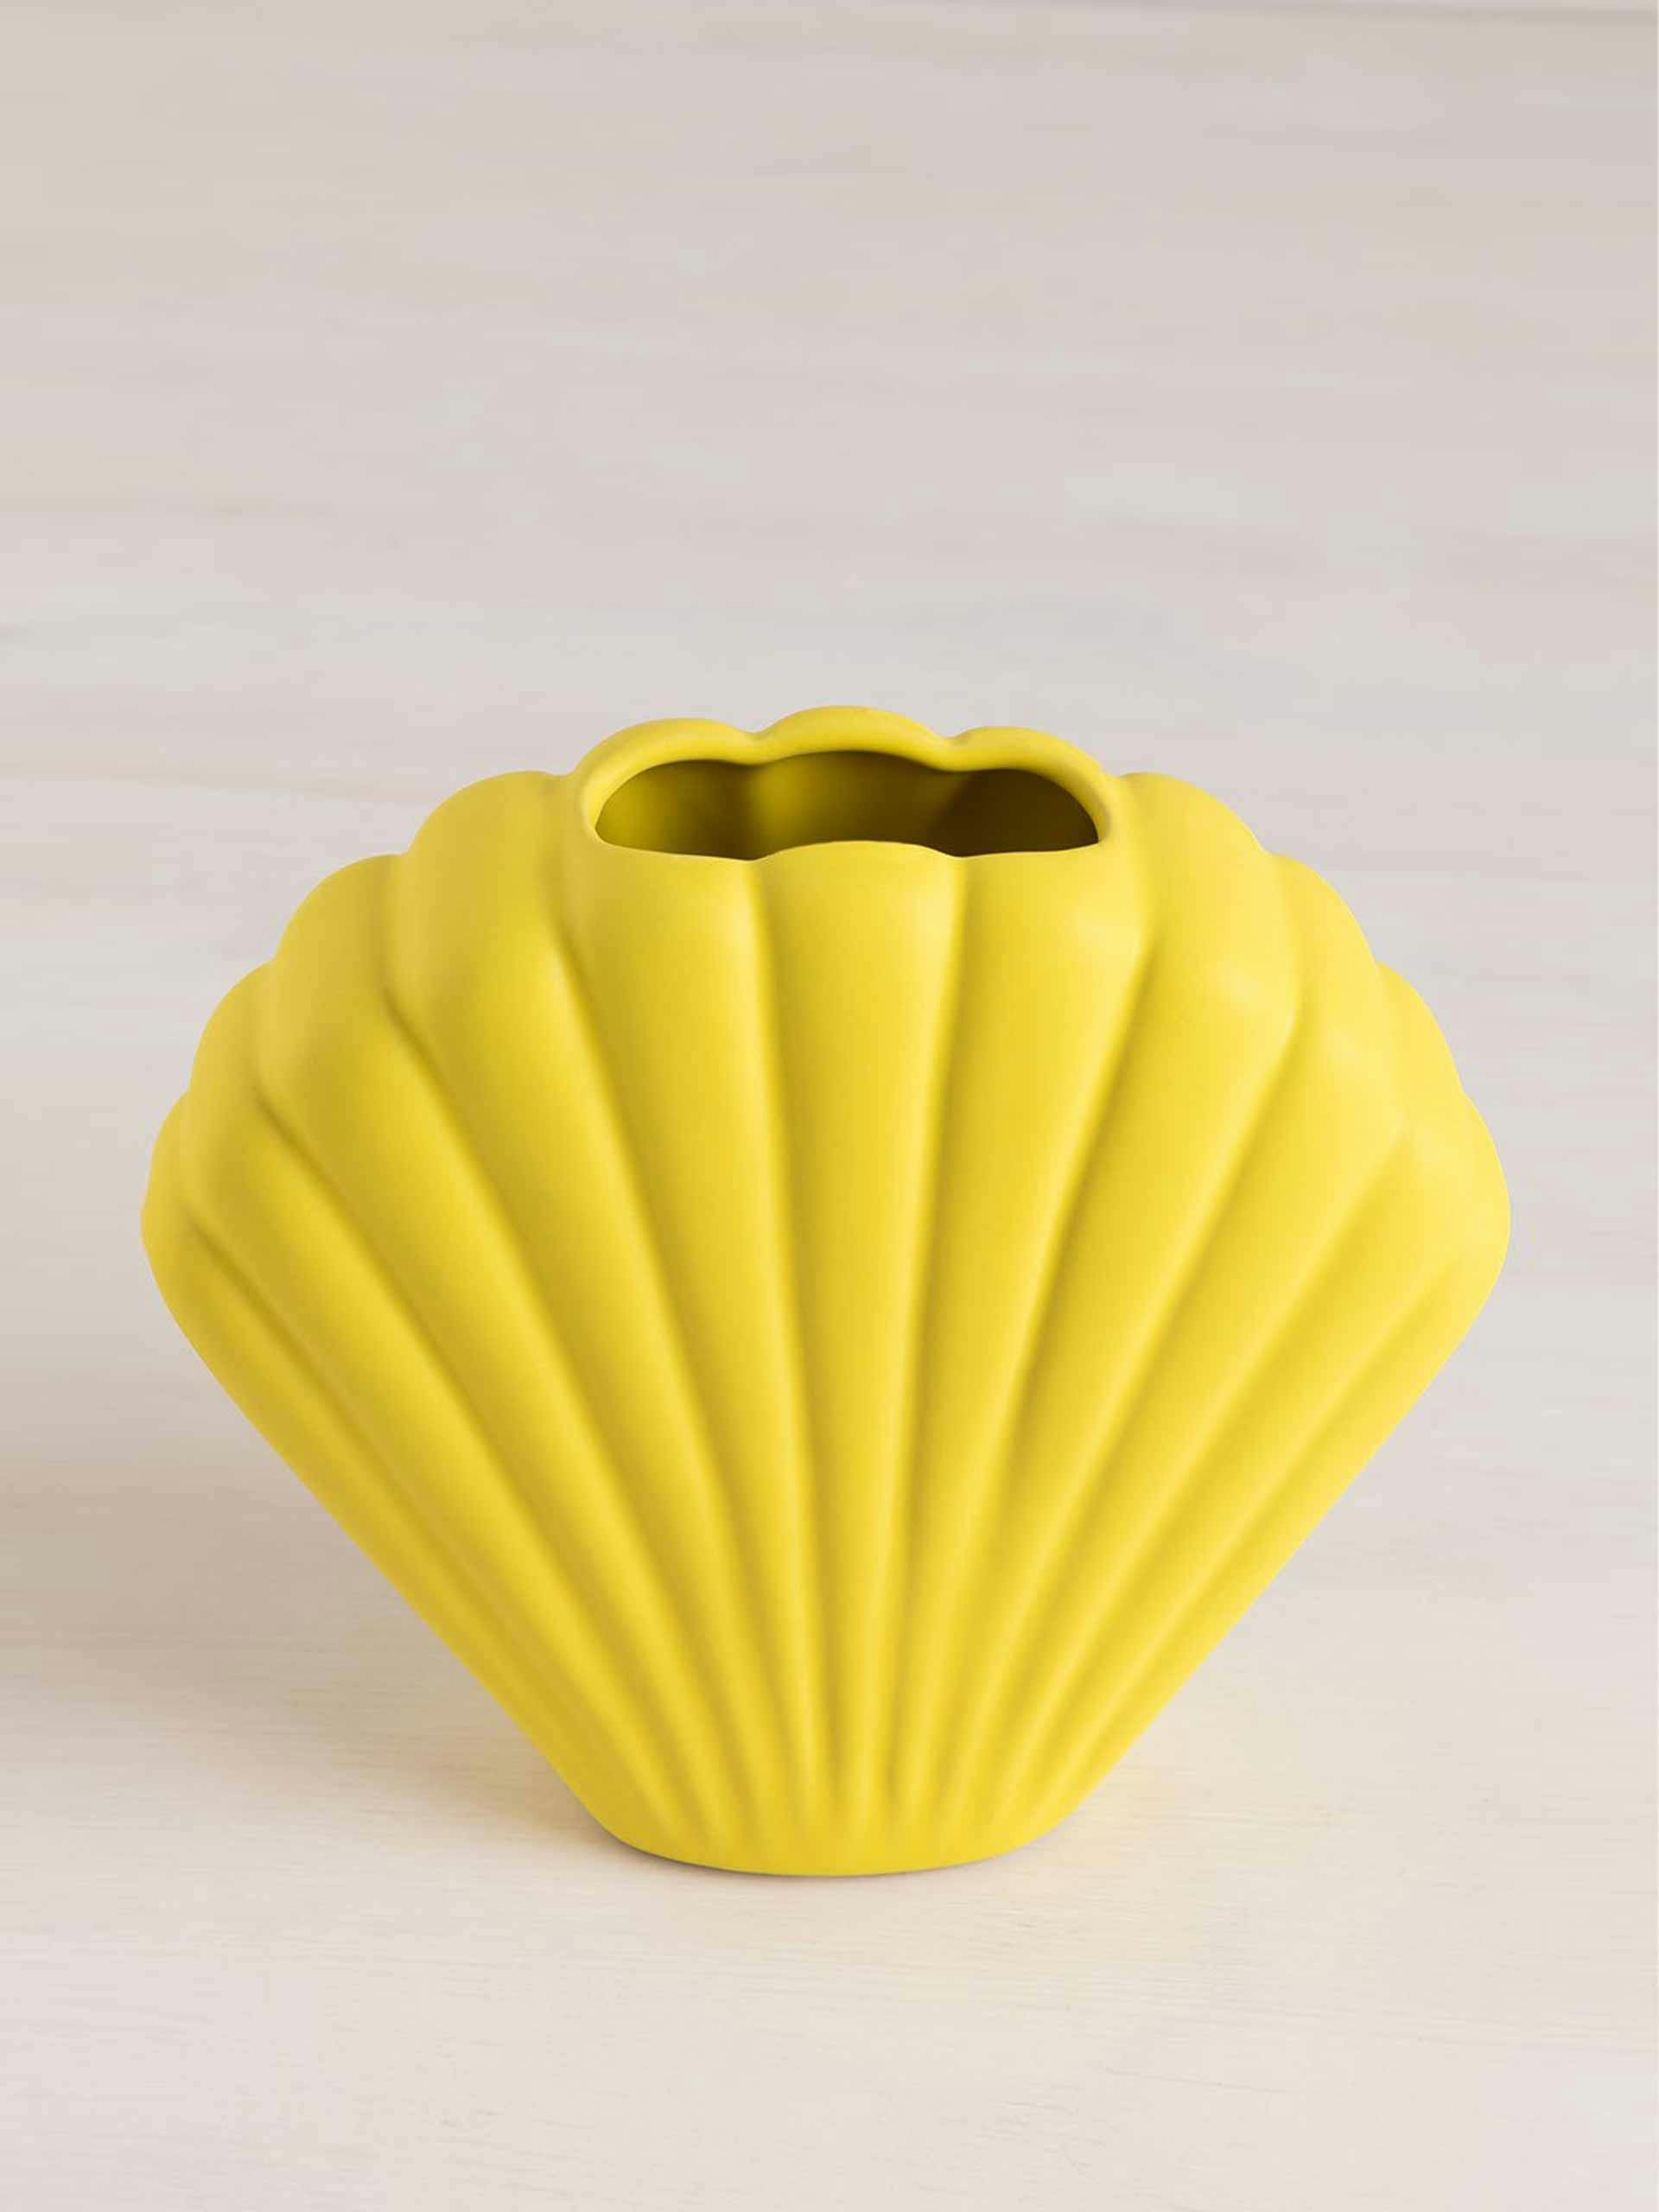 Yellow ceramic vase